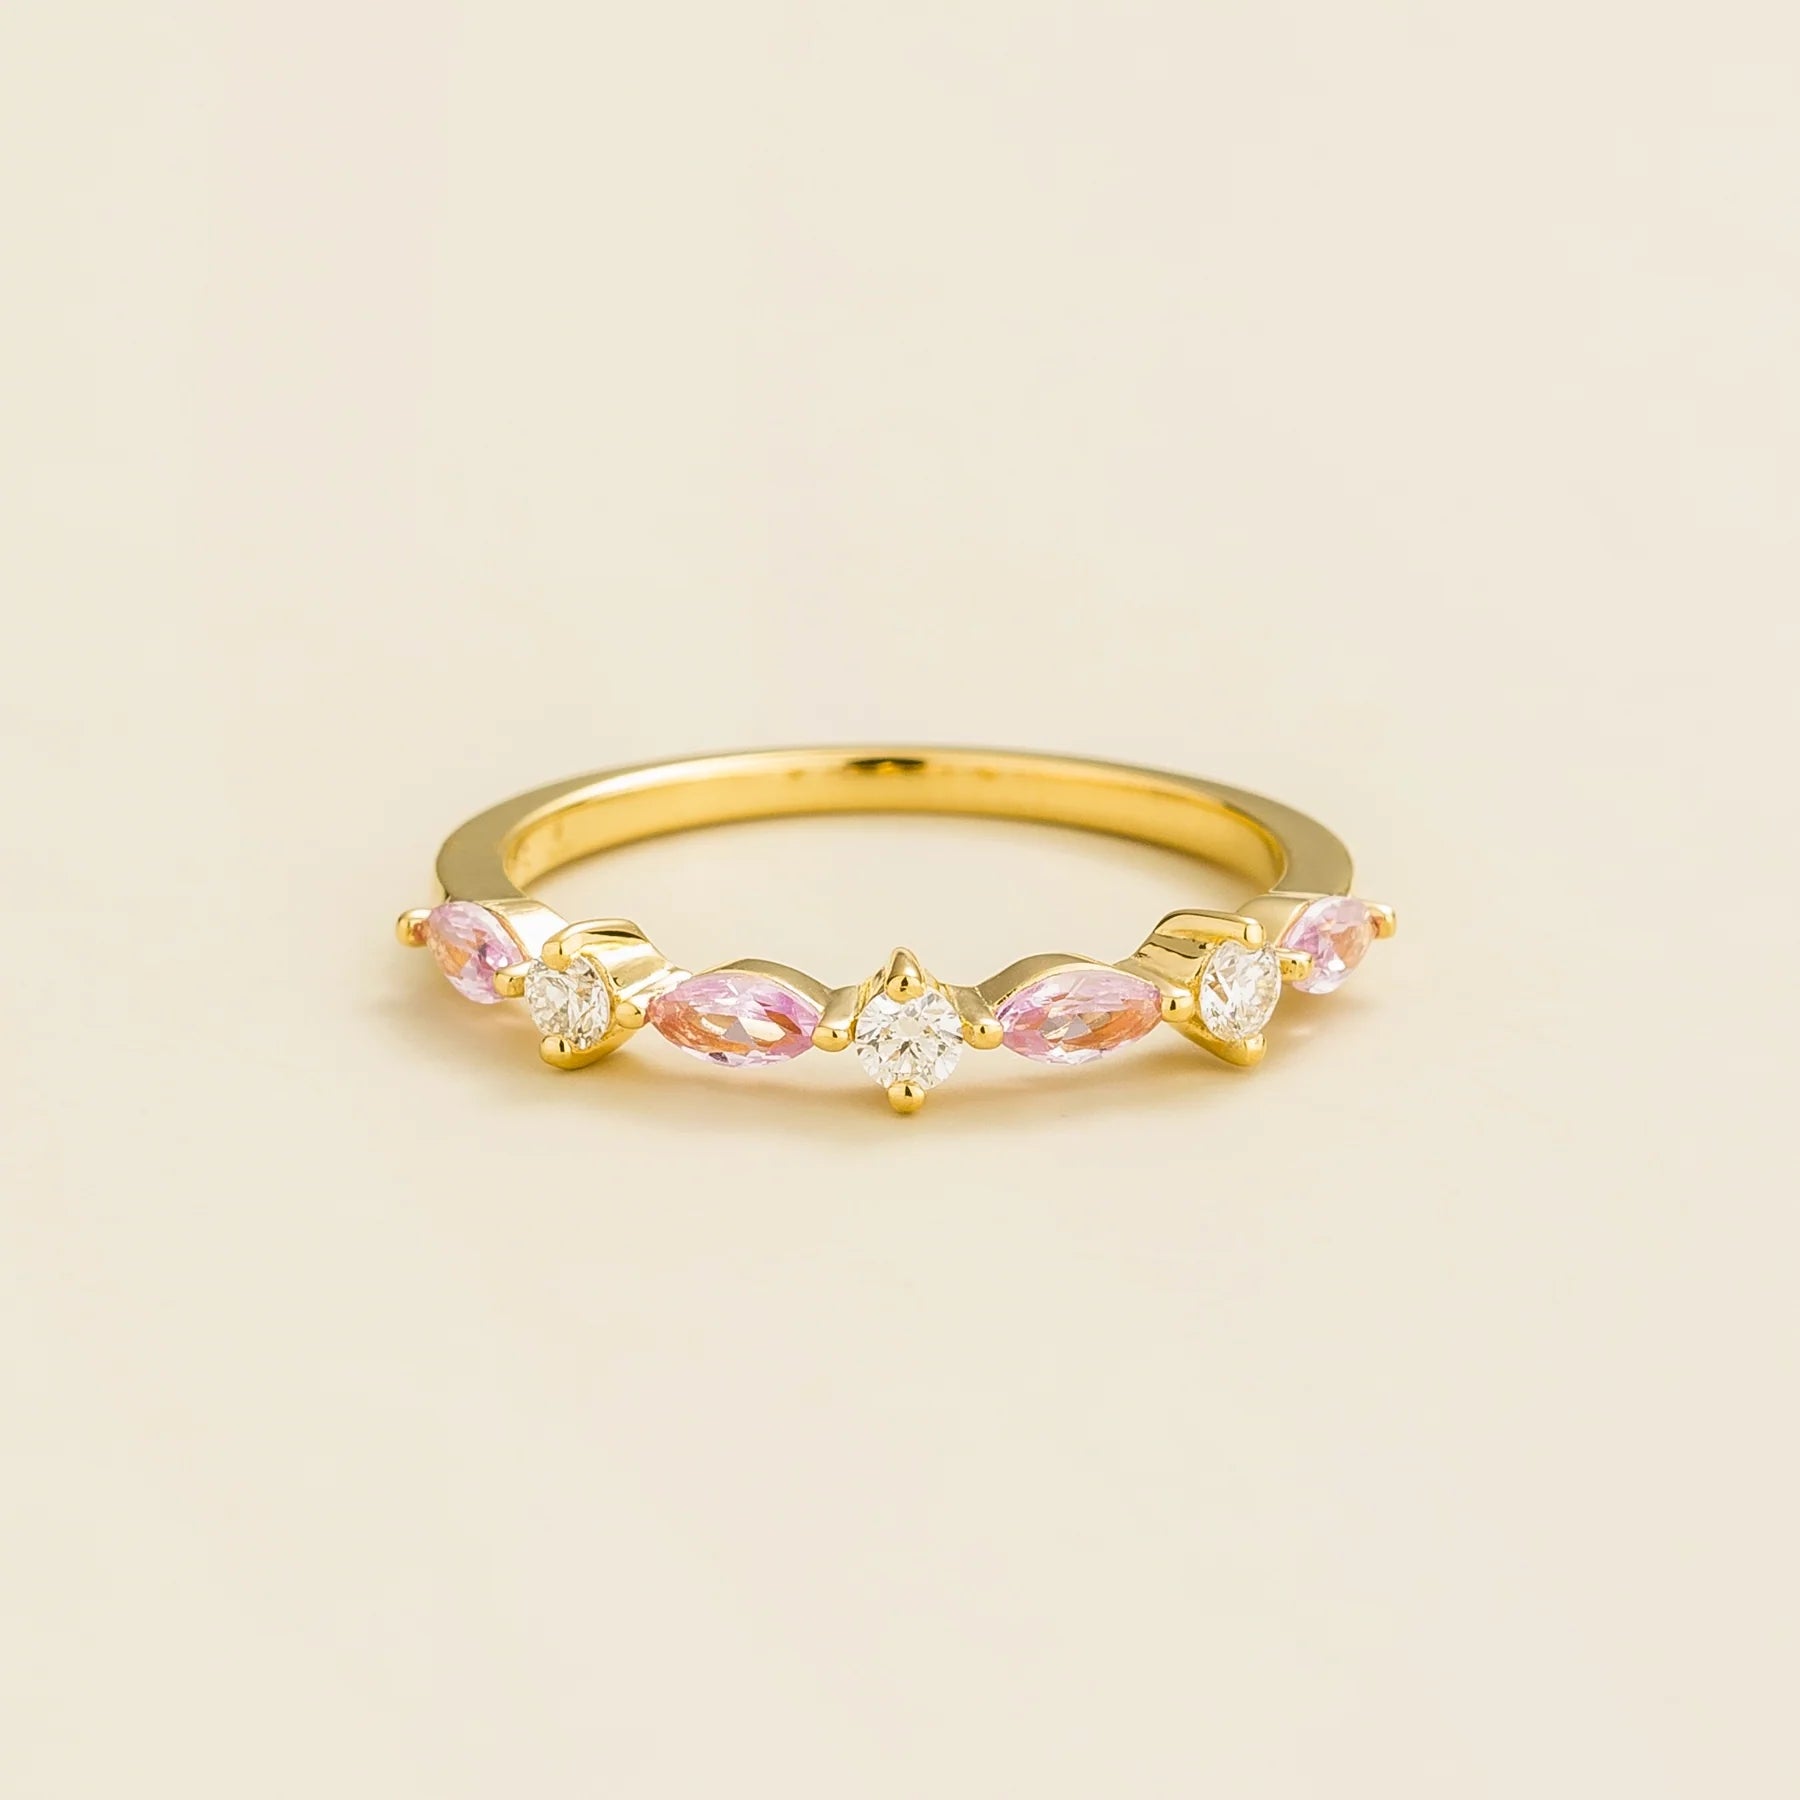 Markiz Gold Ring In Pink Sapphire and Diamond Bespoke Jewellery From London